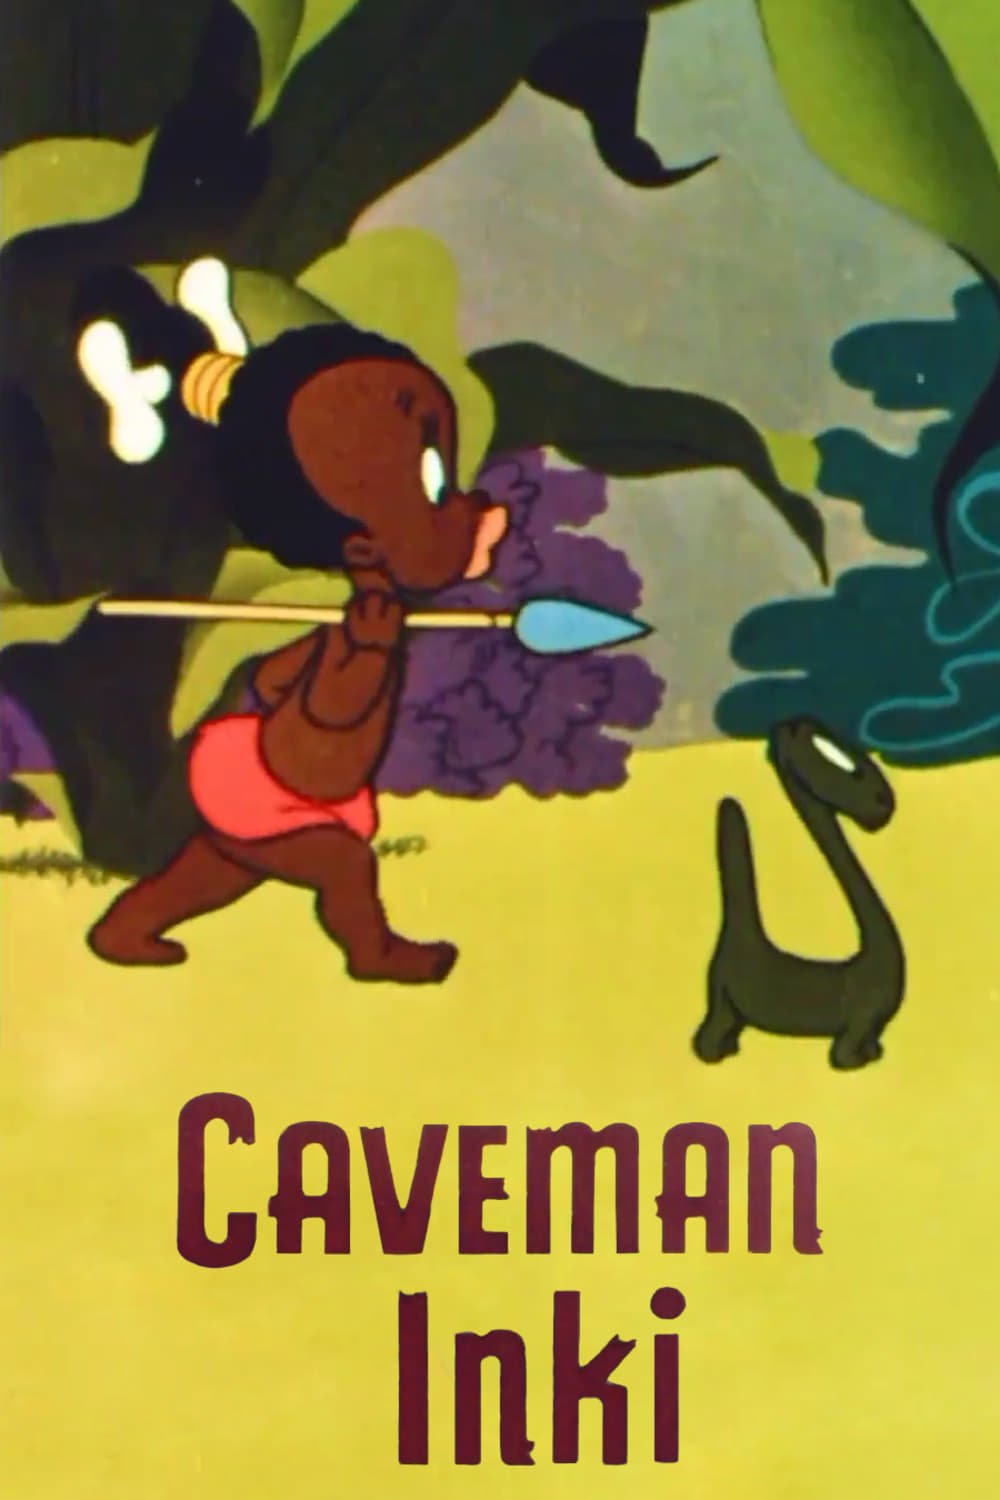 Caveman Inki (1950)